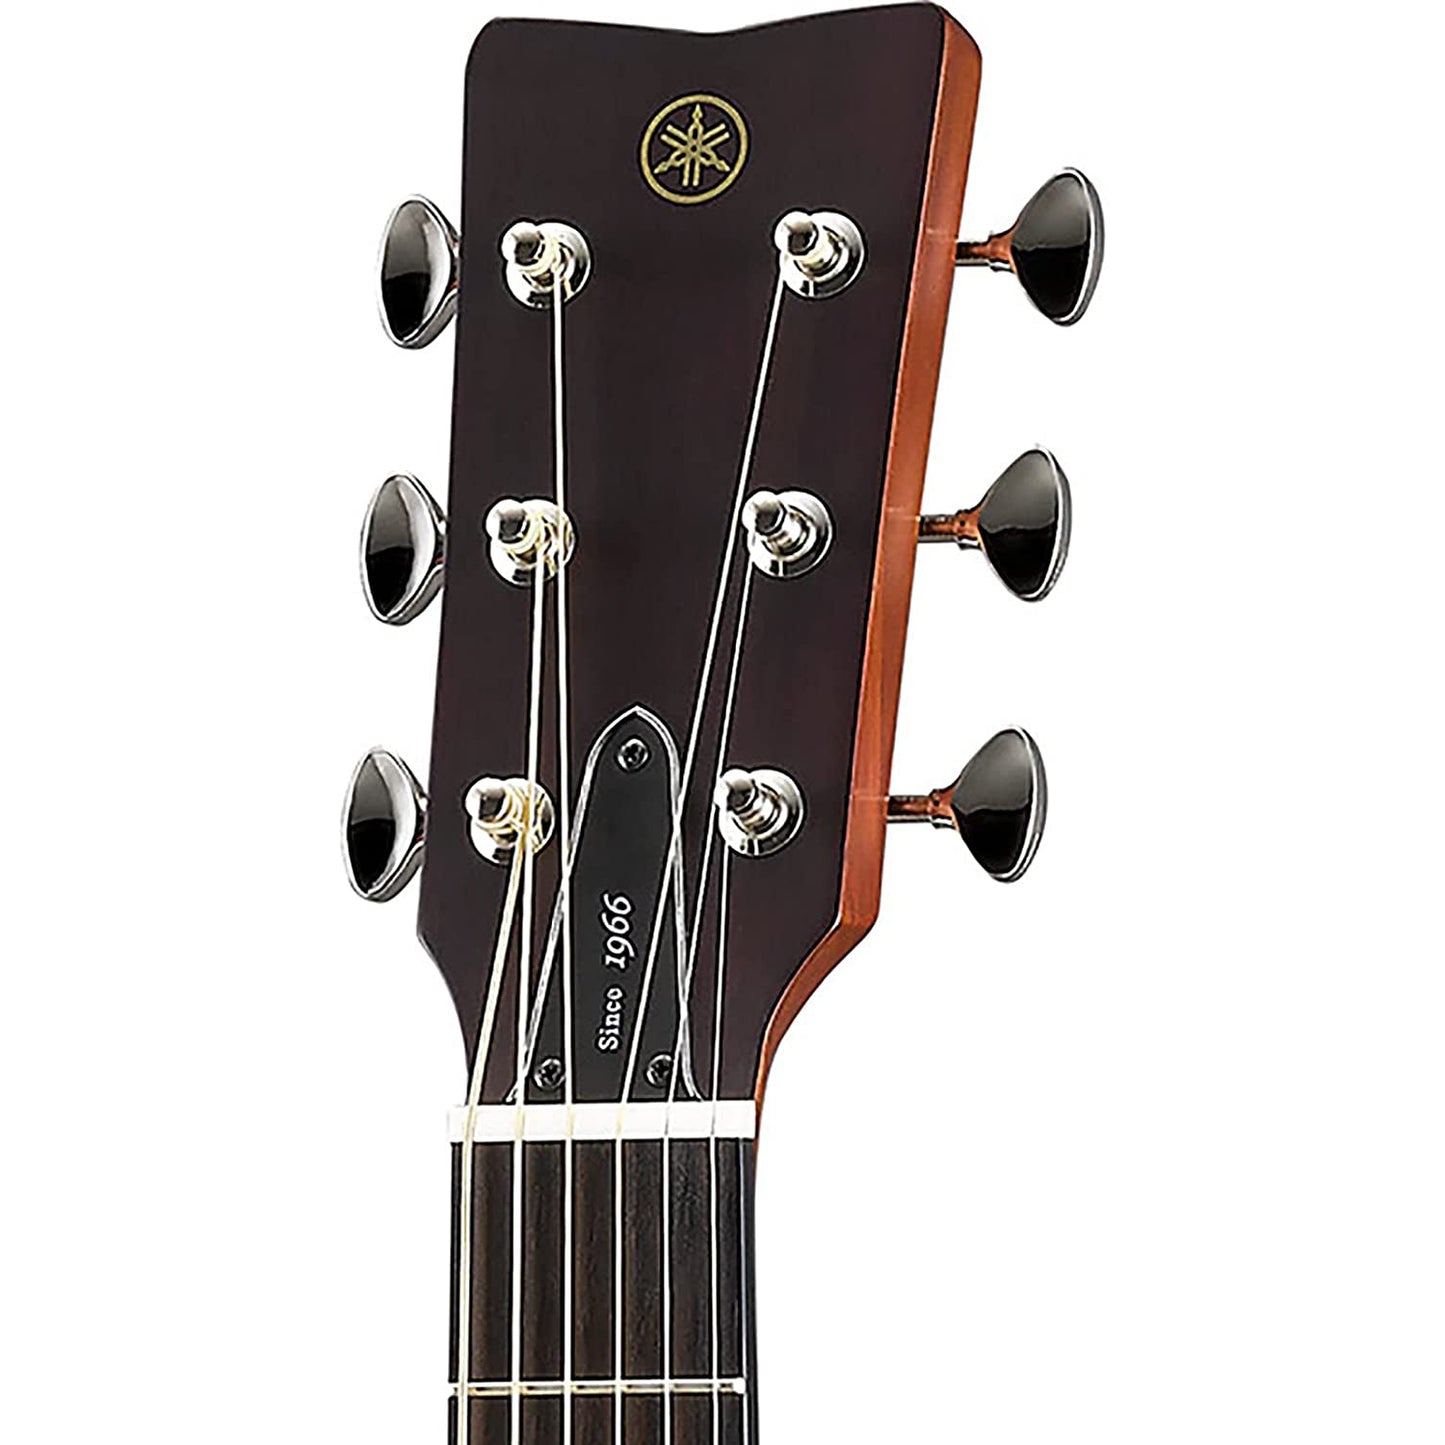 Yamaha FG5 Red Label Folk Guitar with Case